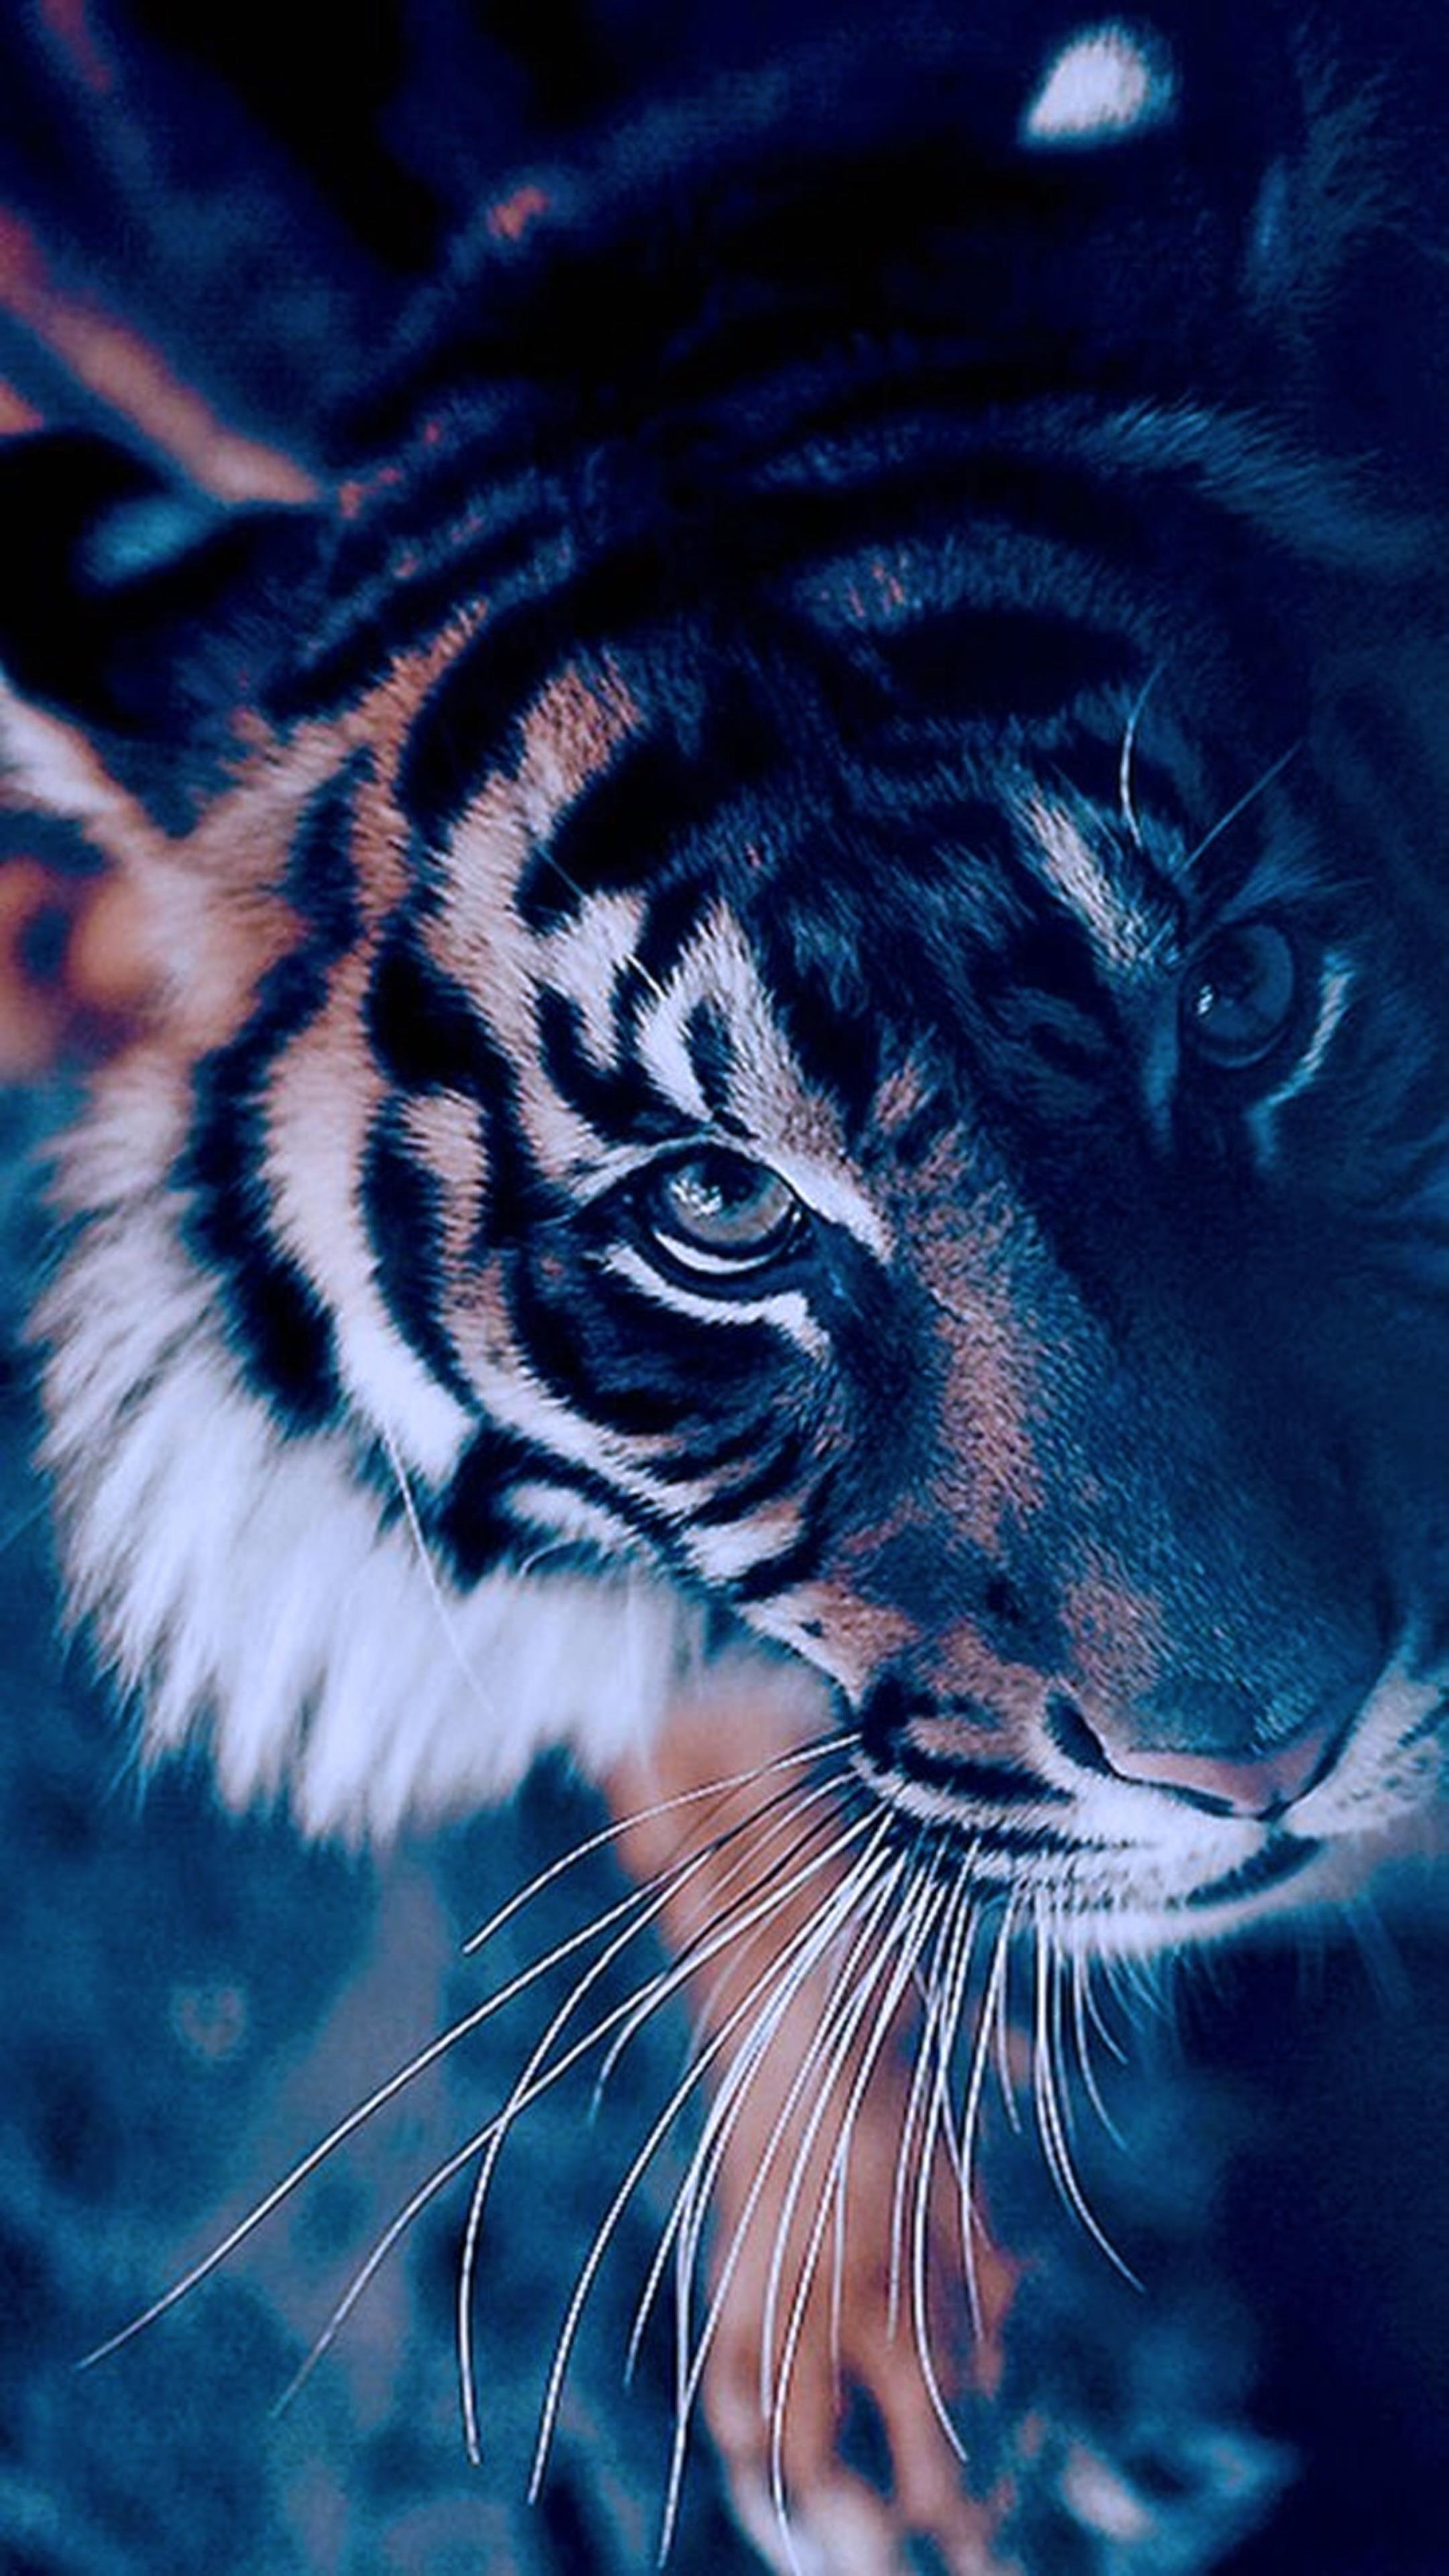 Download Gambar Harimau | Tiger wallpaper, Tiger face, Tiger images